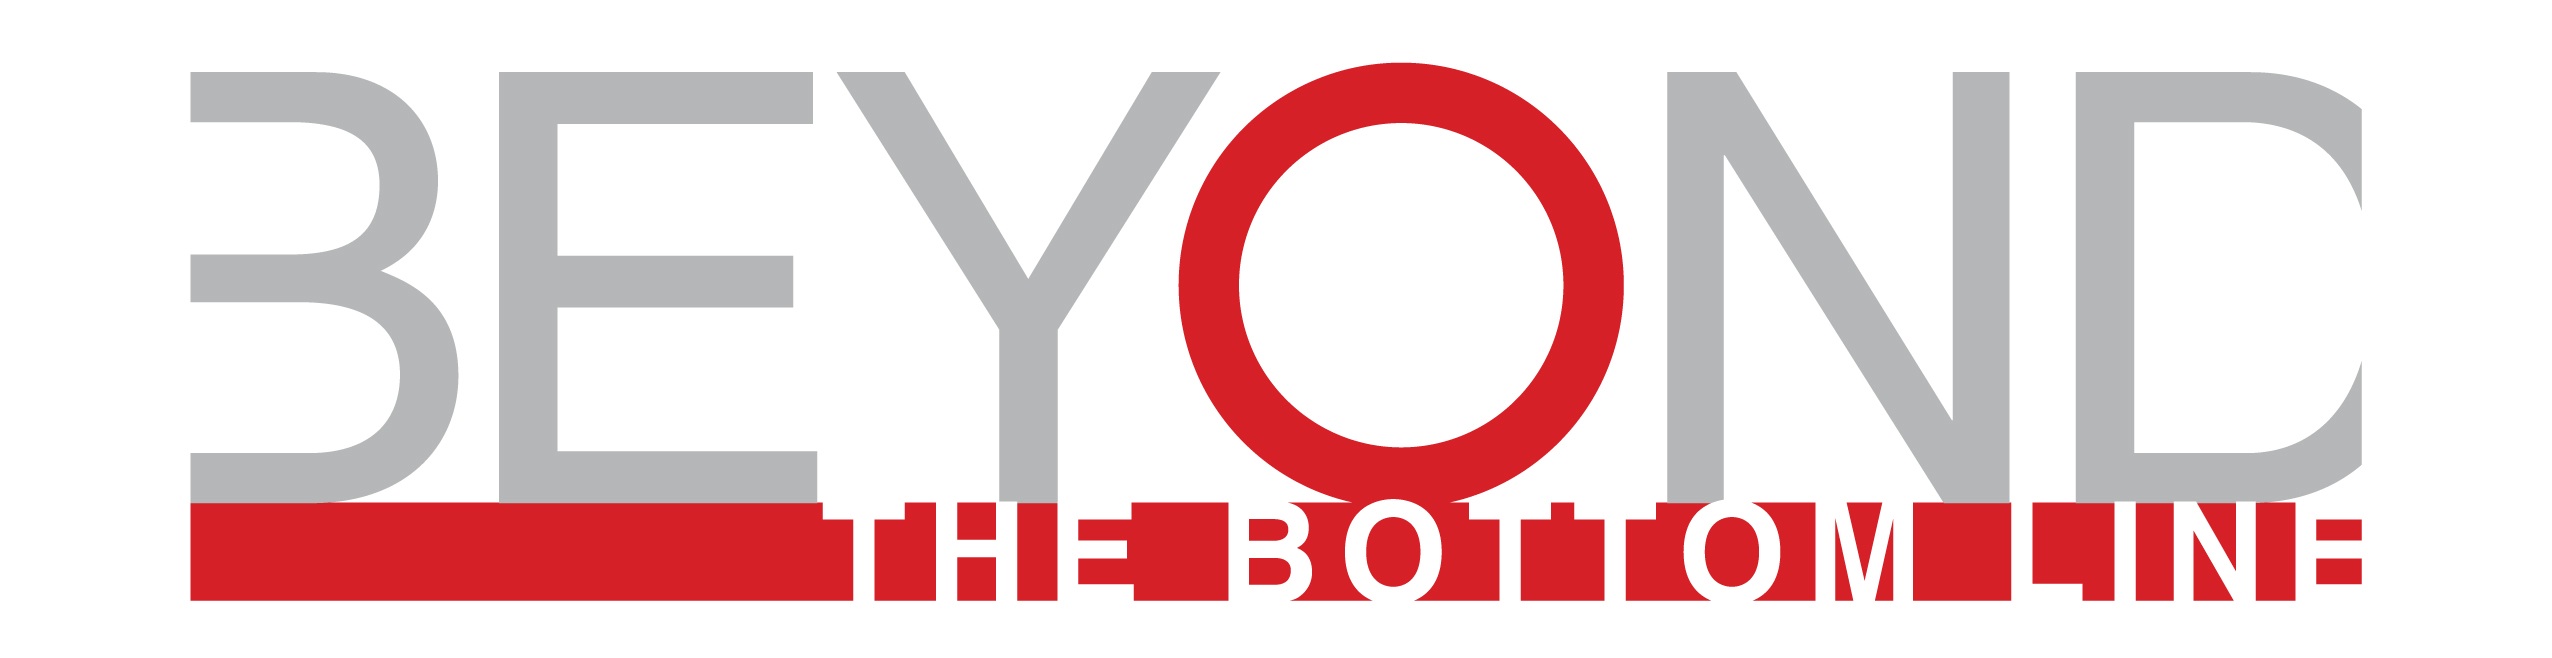 Beyond the Bottom Line logo